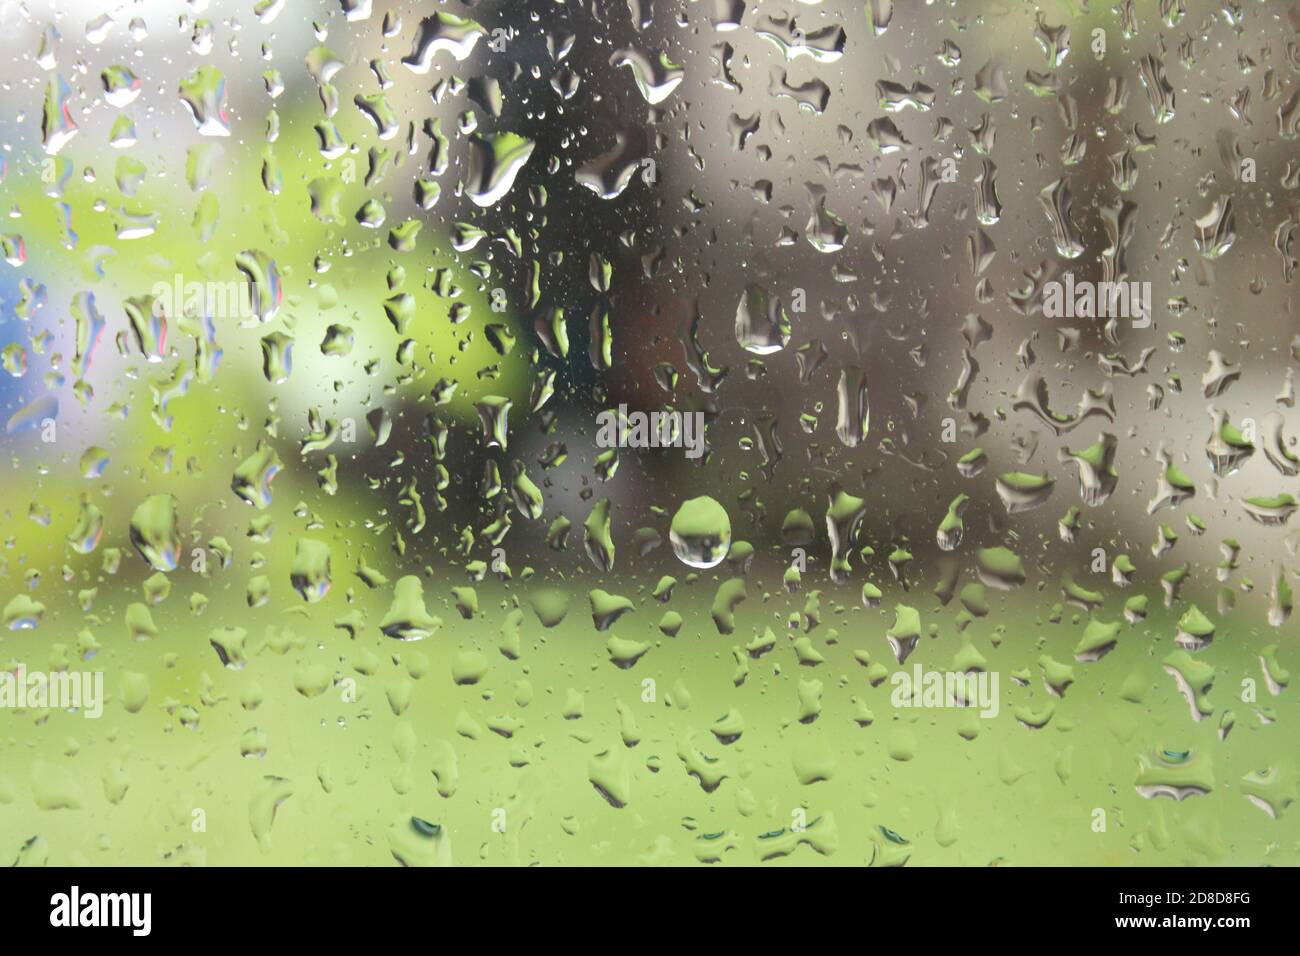 rain water on a glass window, wet weather Stock Photo